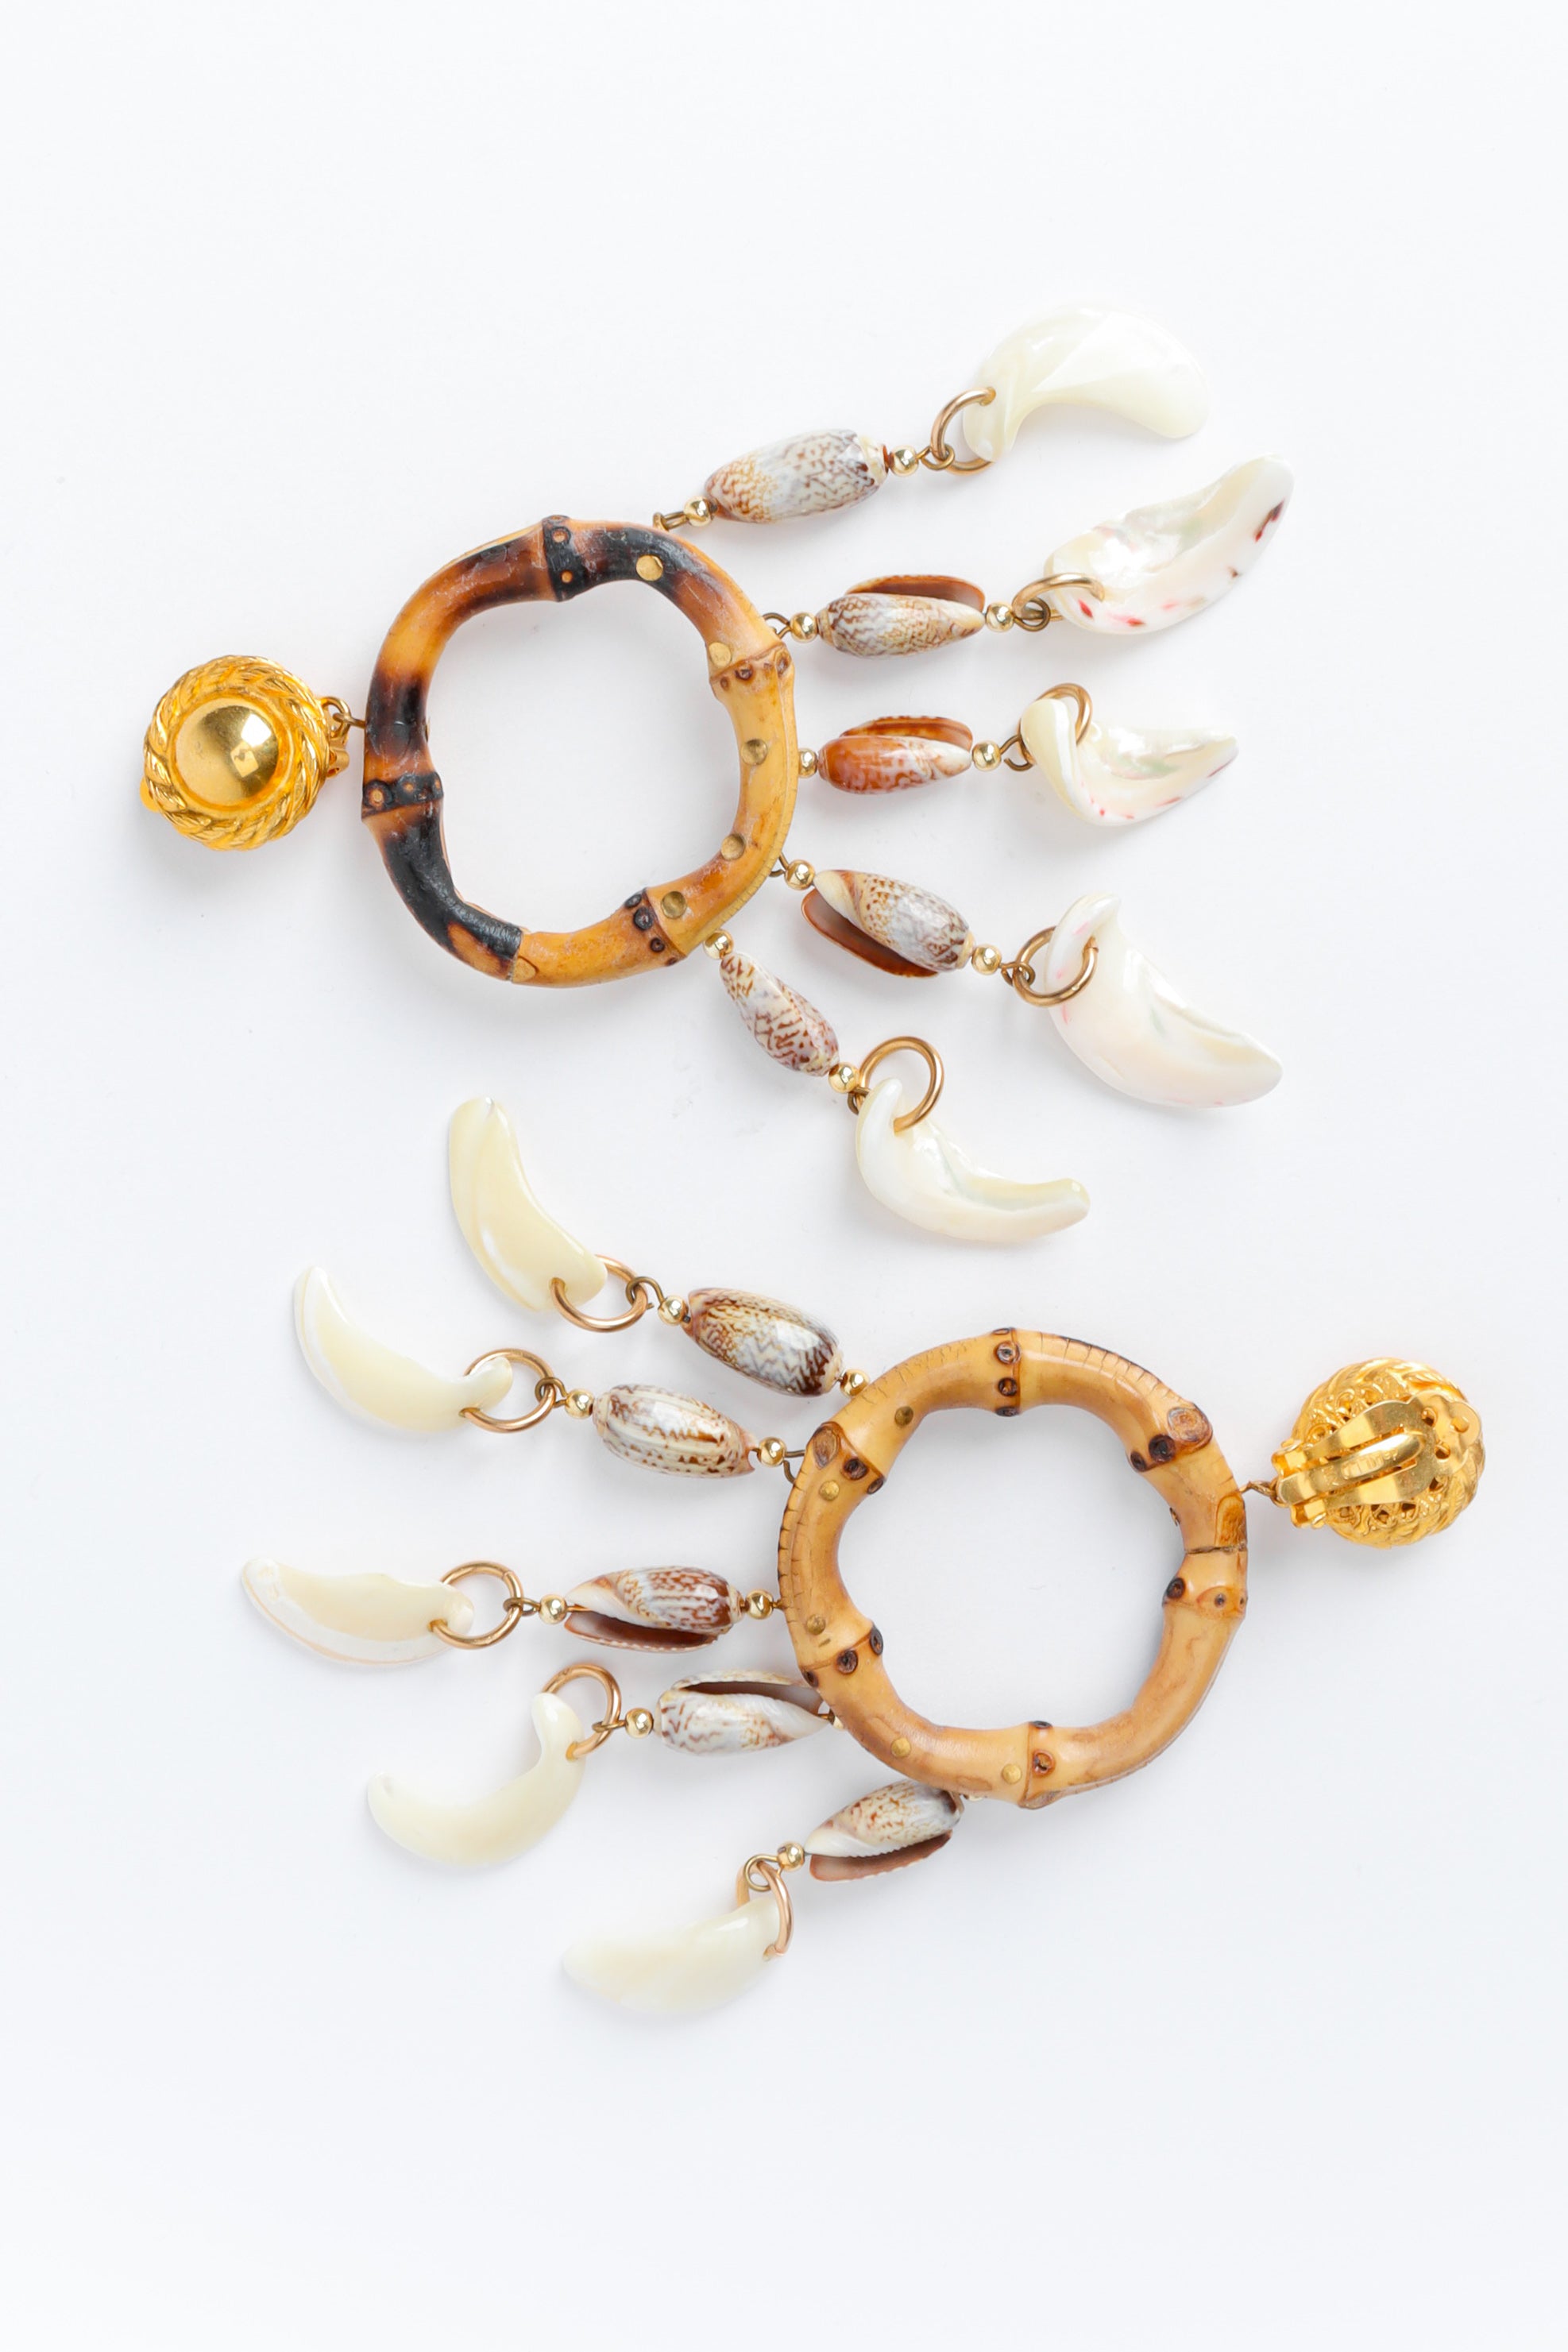 Vintage William De Lillo Bamboo Seashell Fringe Earrings at Recess Los Angeles